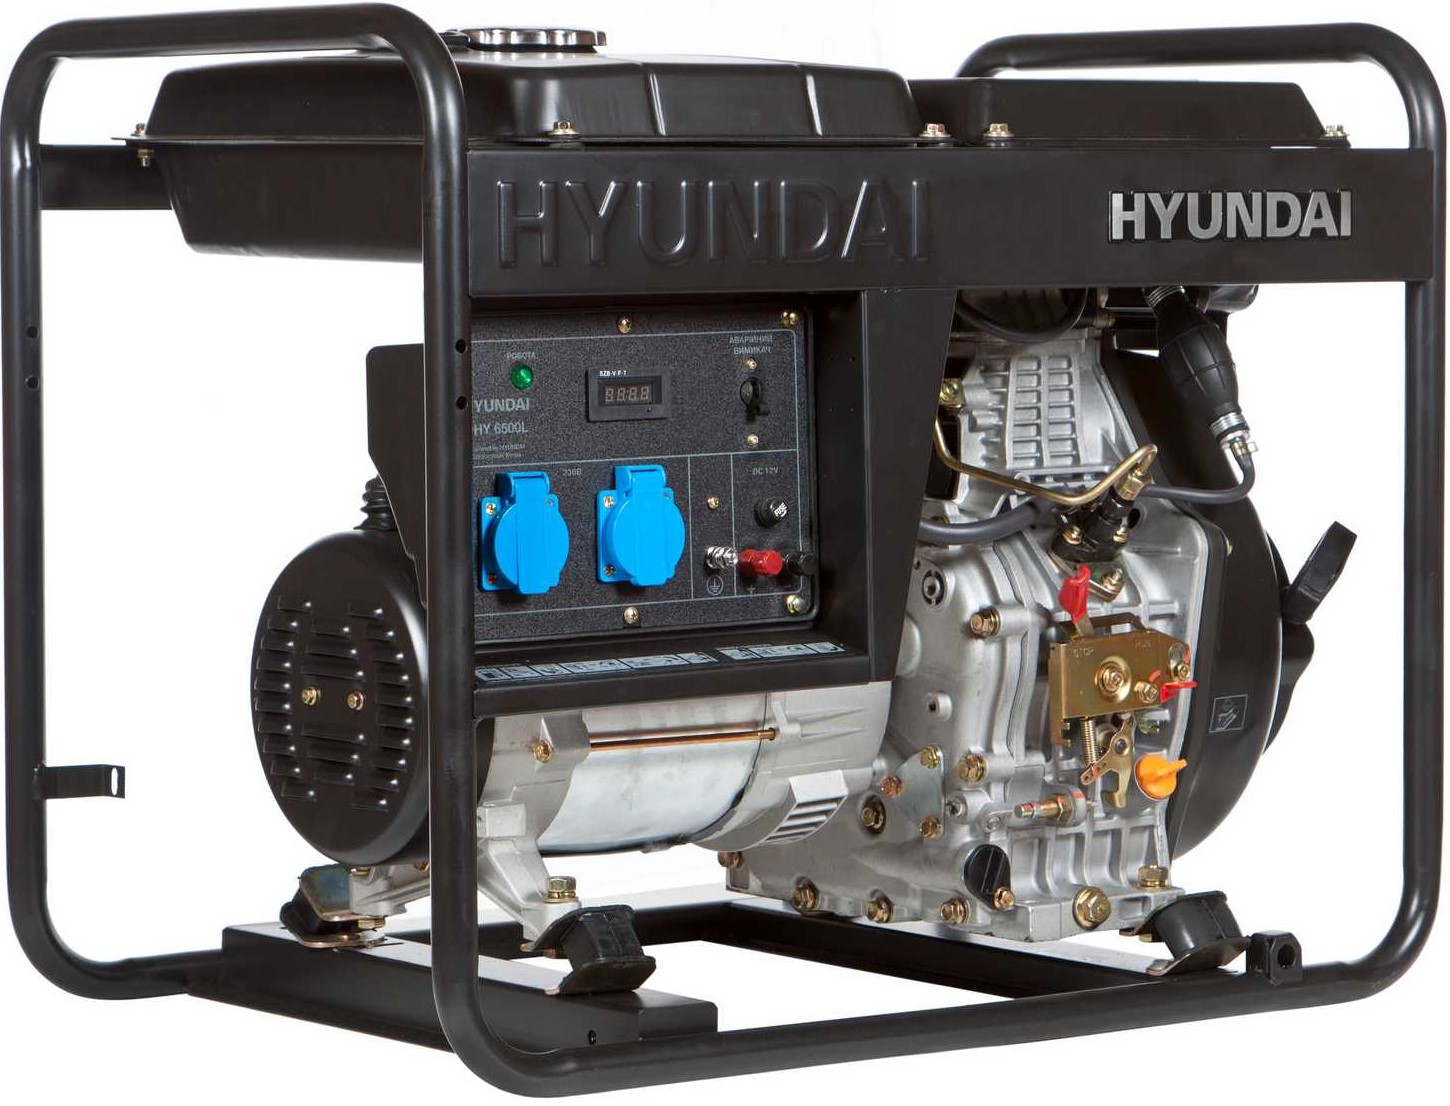 Генератор на 5 кВт Hyundai DHY 6500L